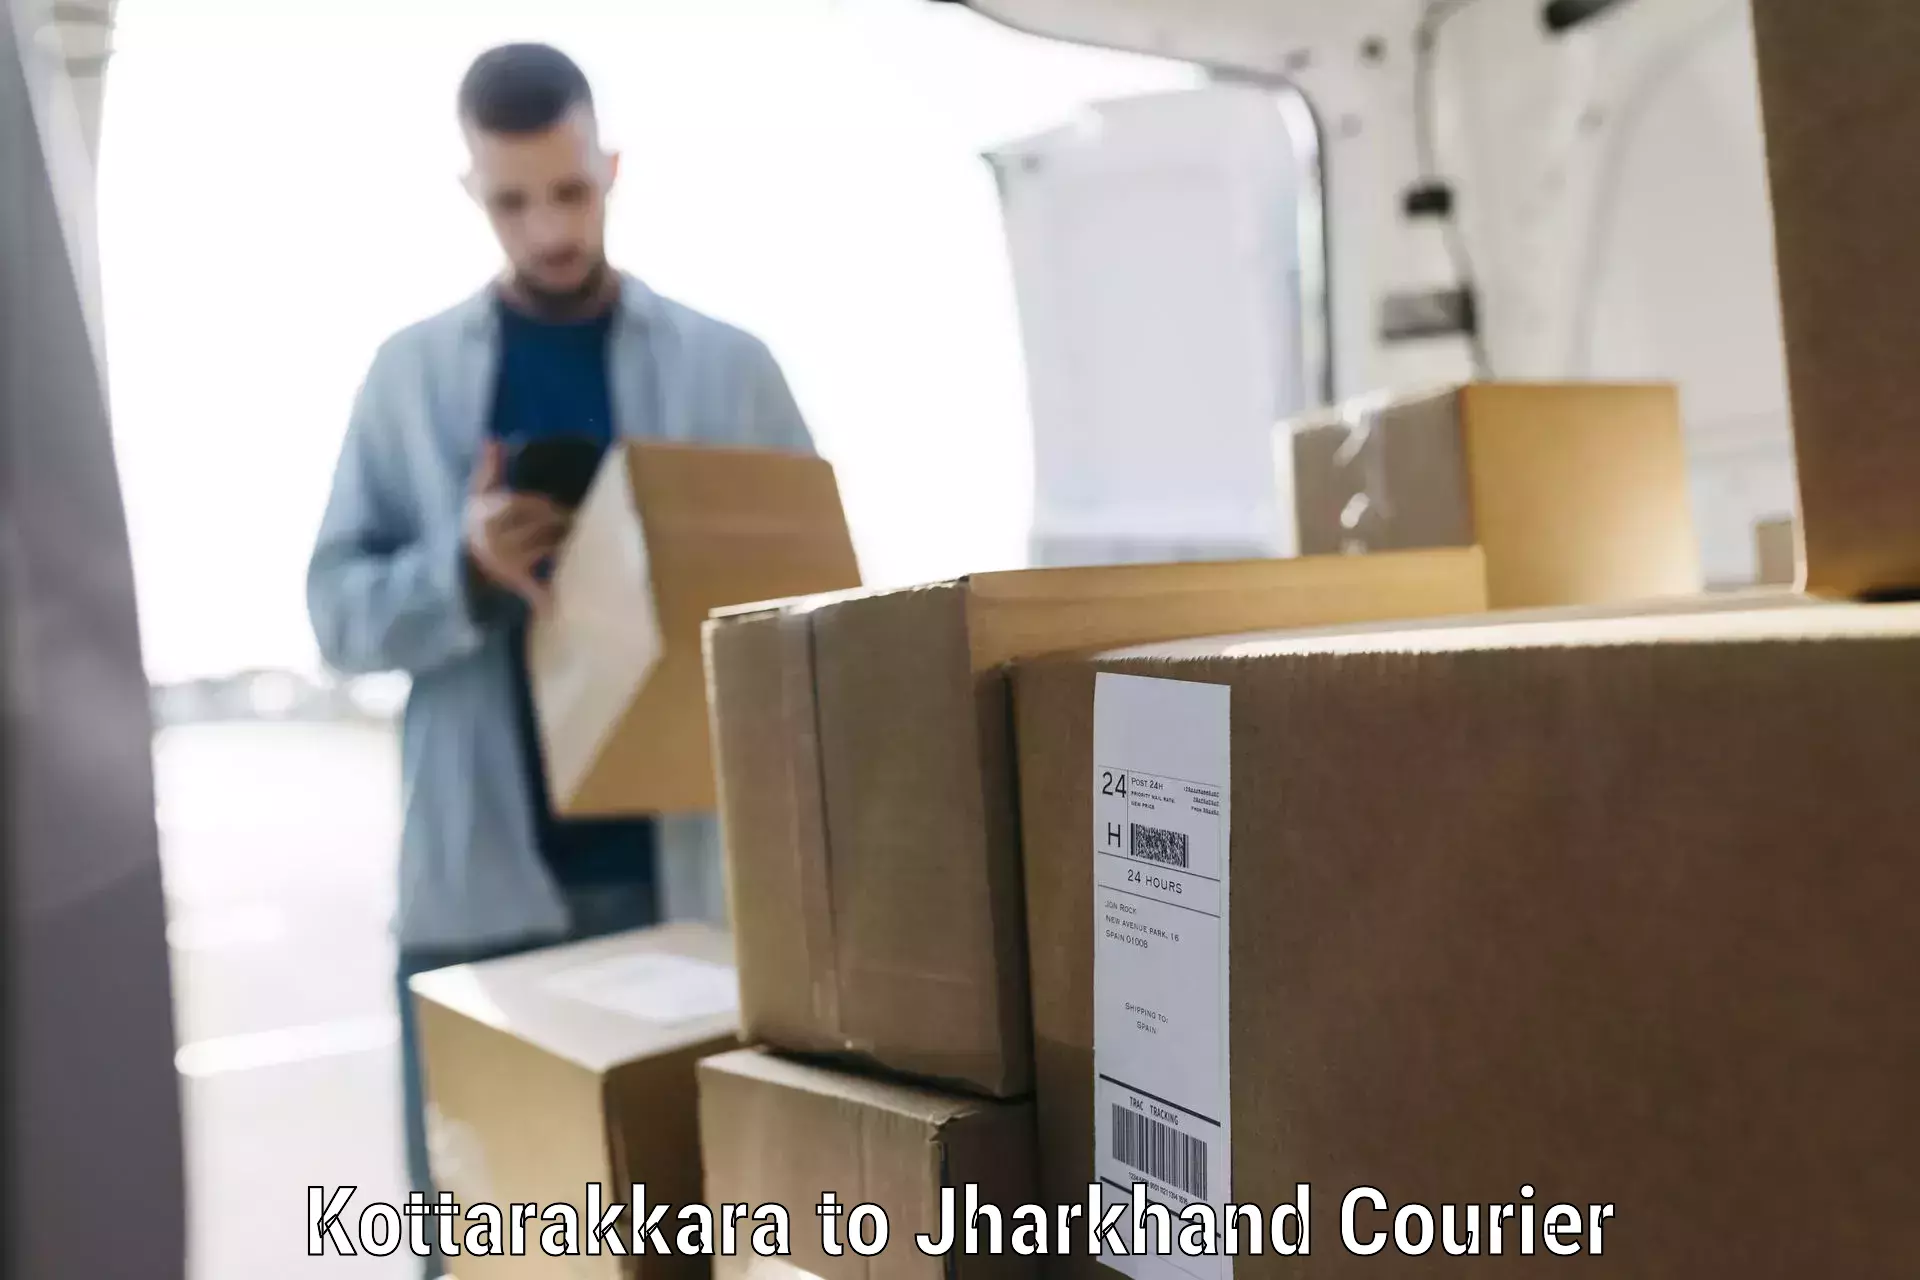 Luggage delivery app Kottarakkara to Jamshedpur